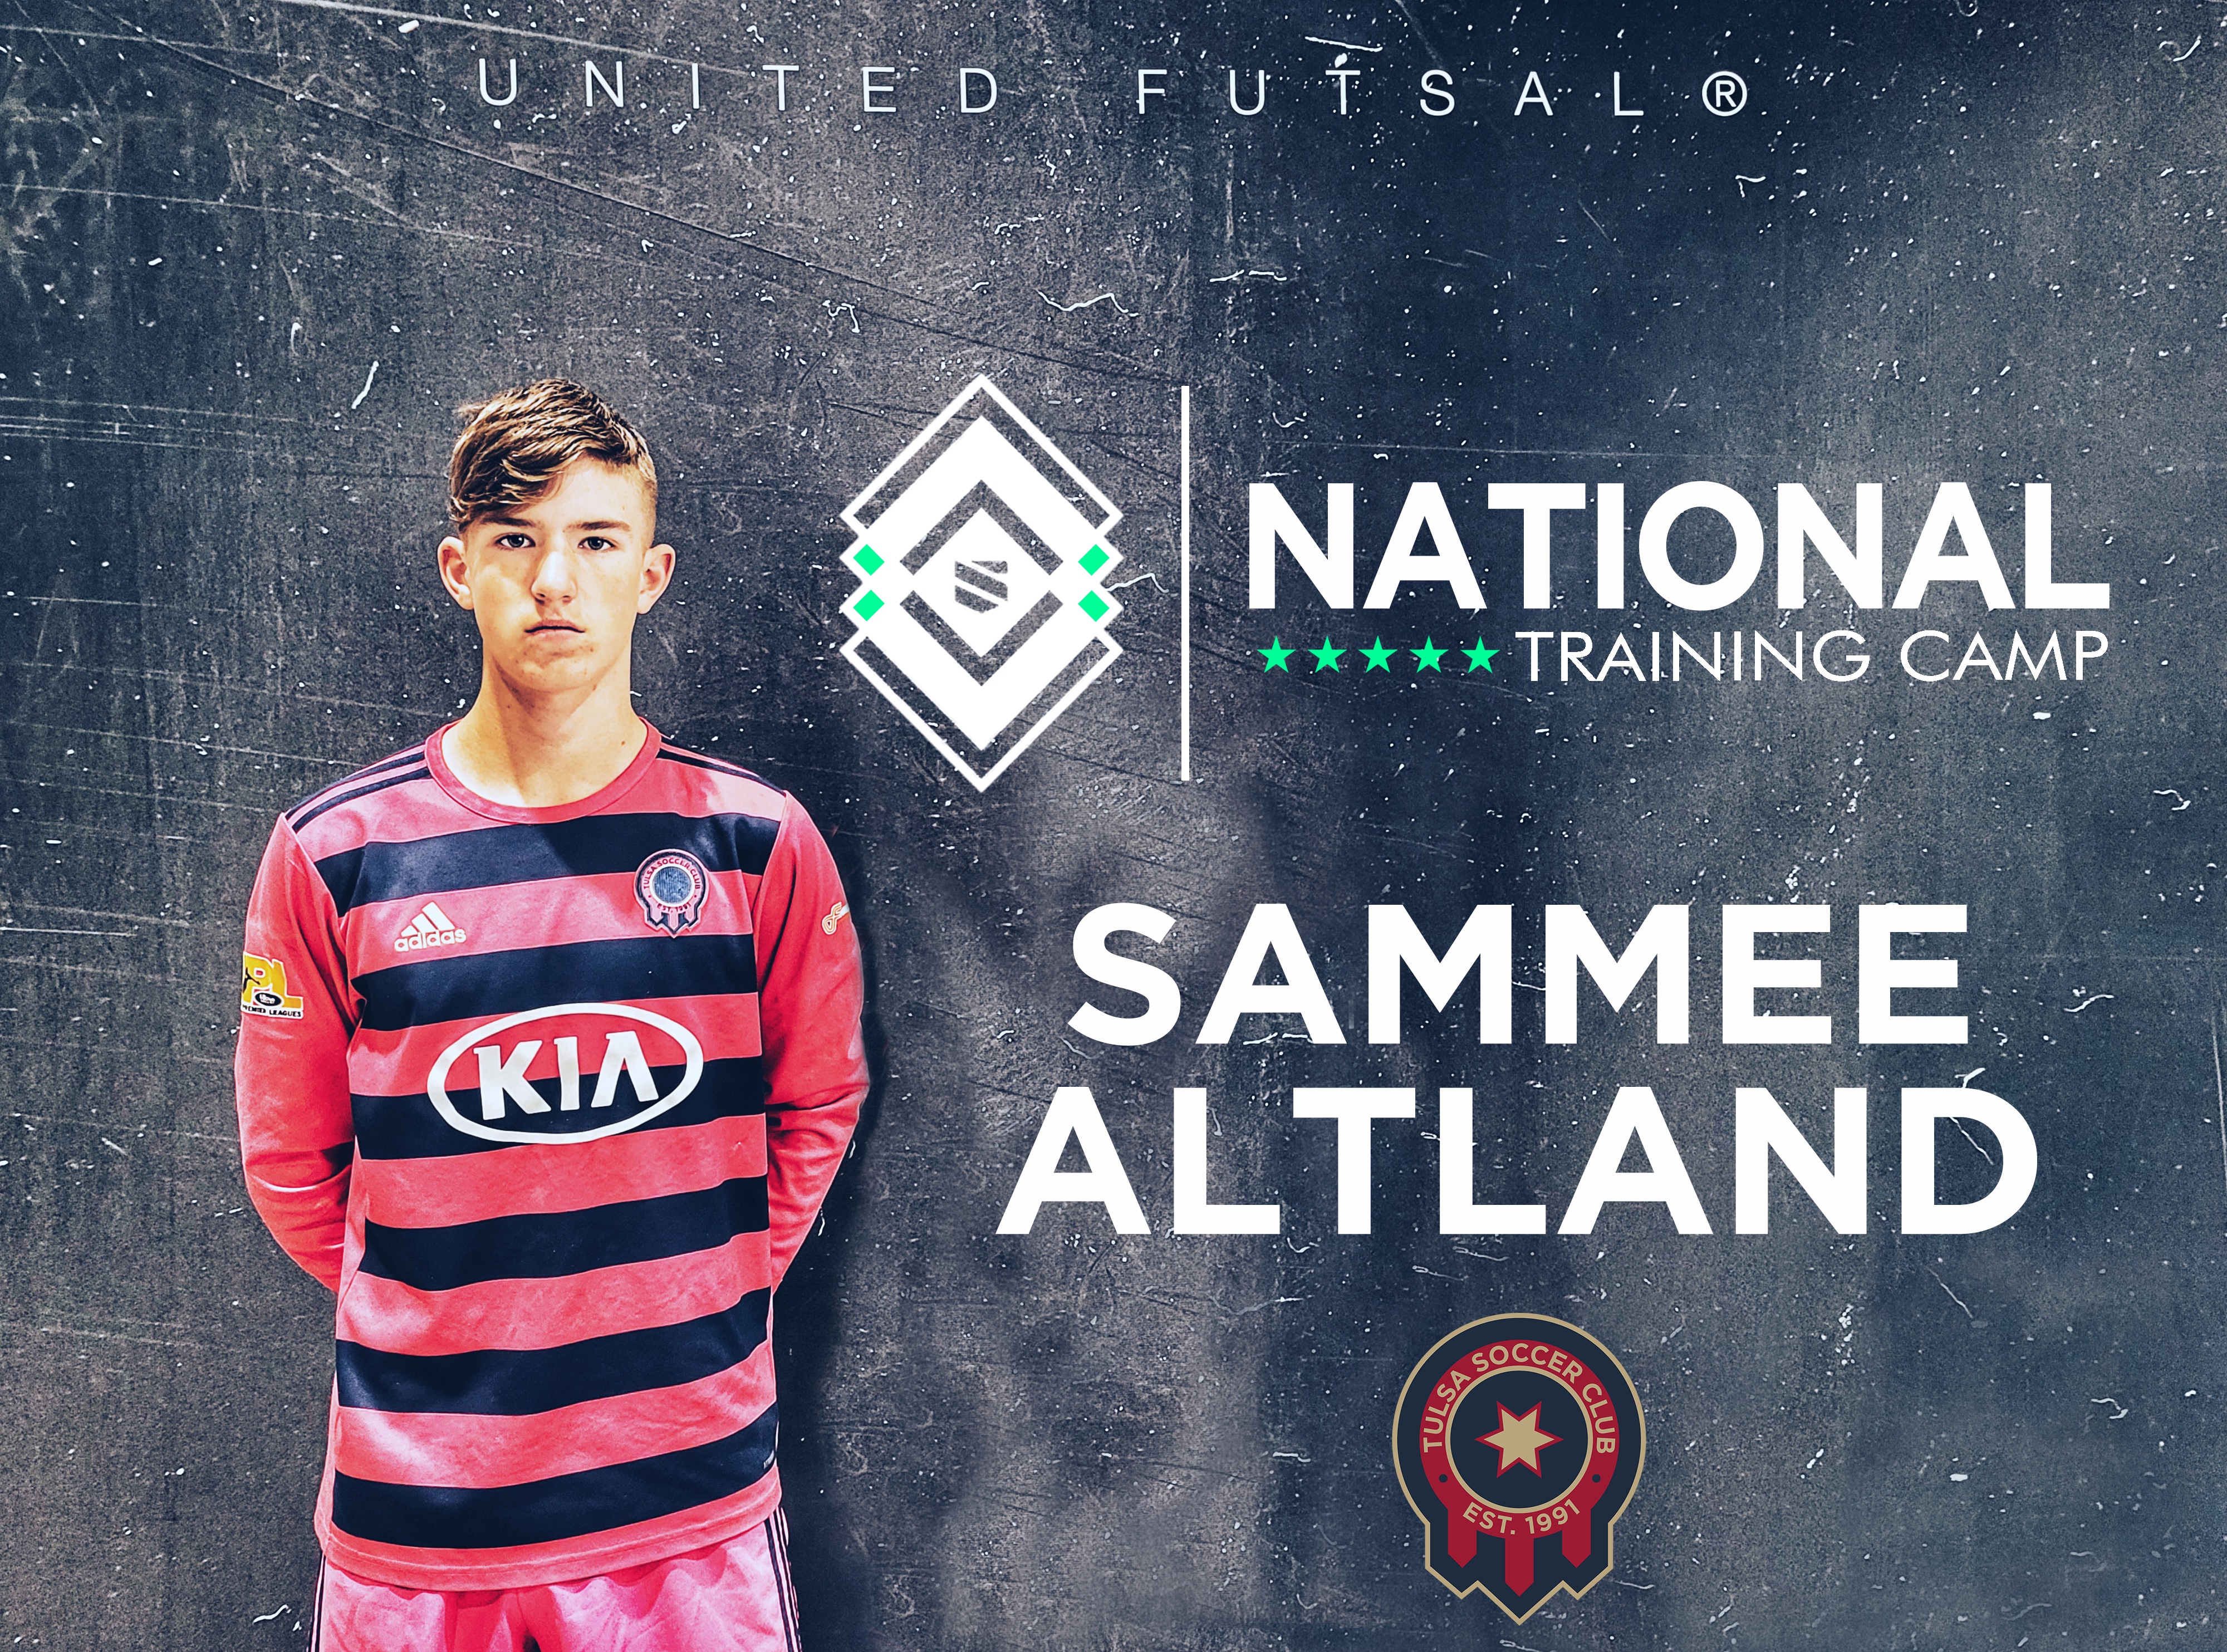 Sammee Altland selcted for United Futsal National Training Camp